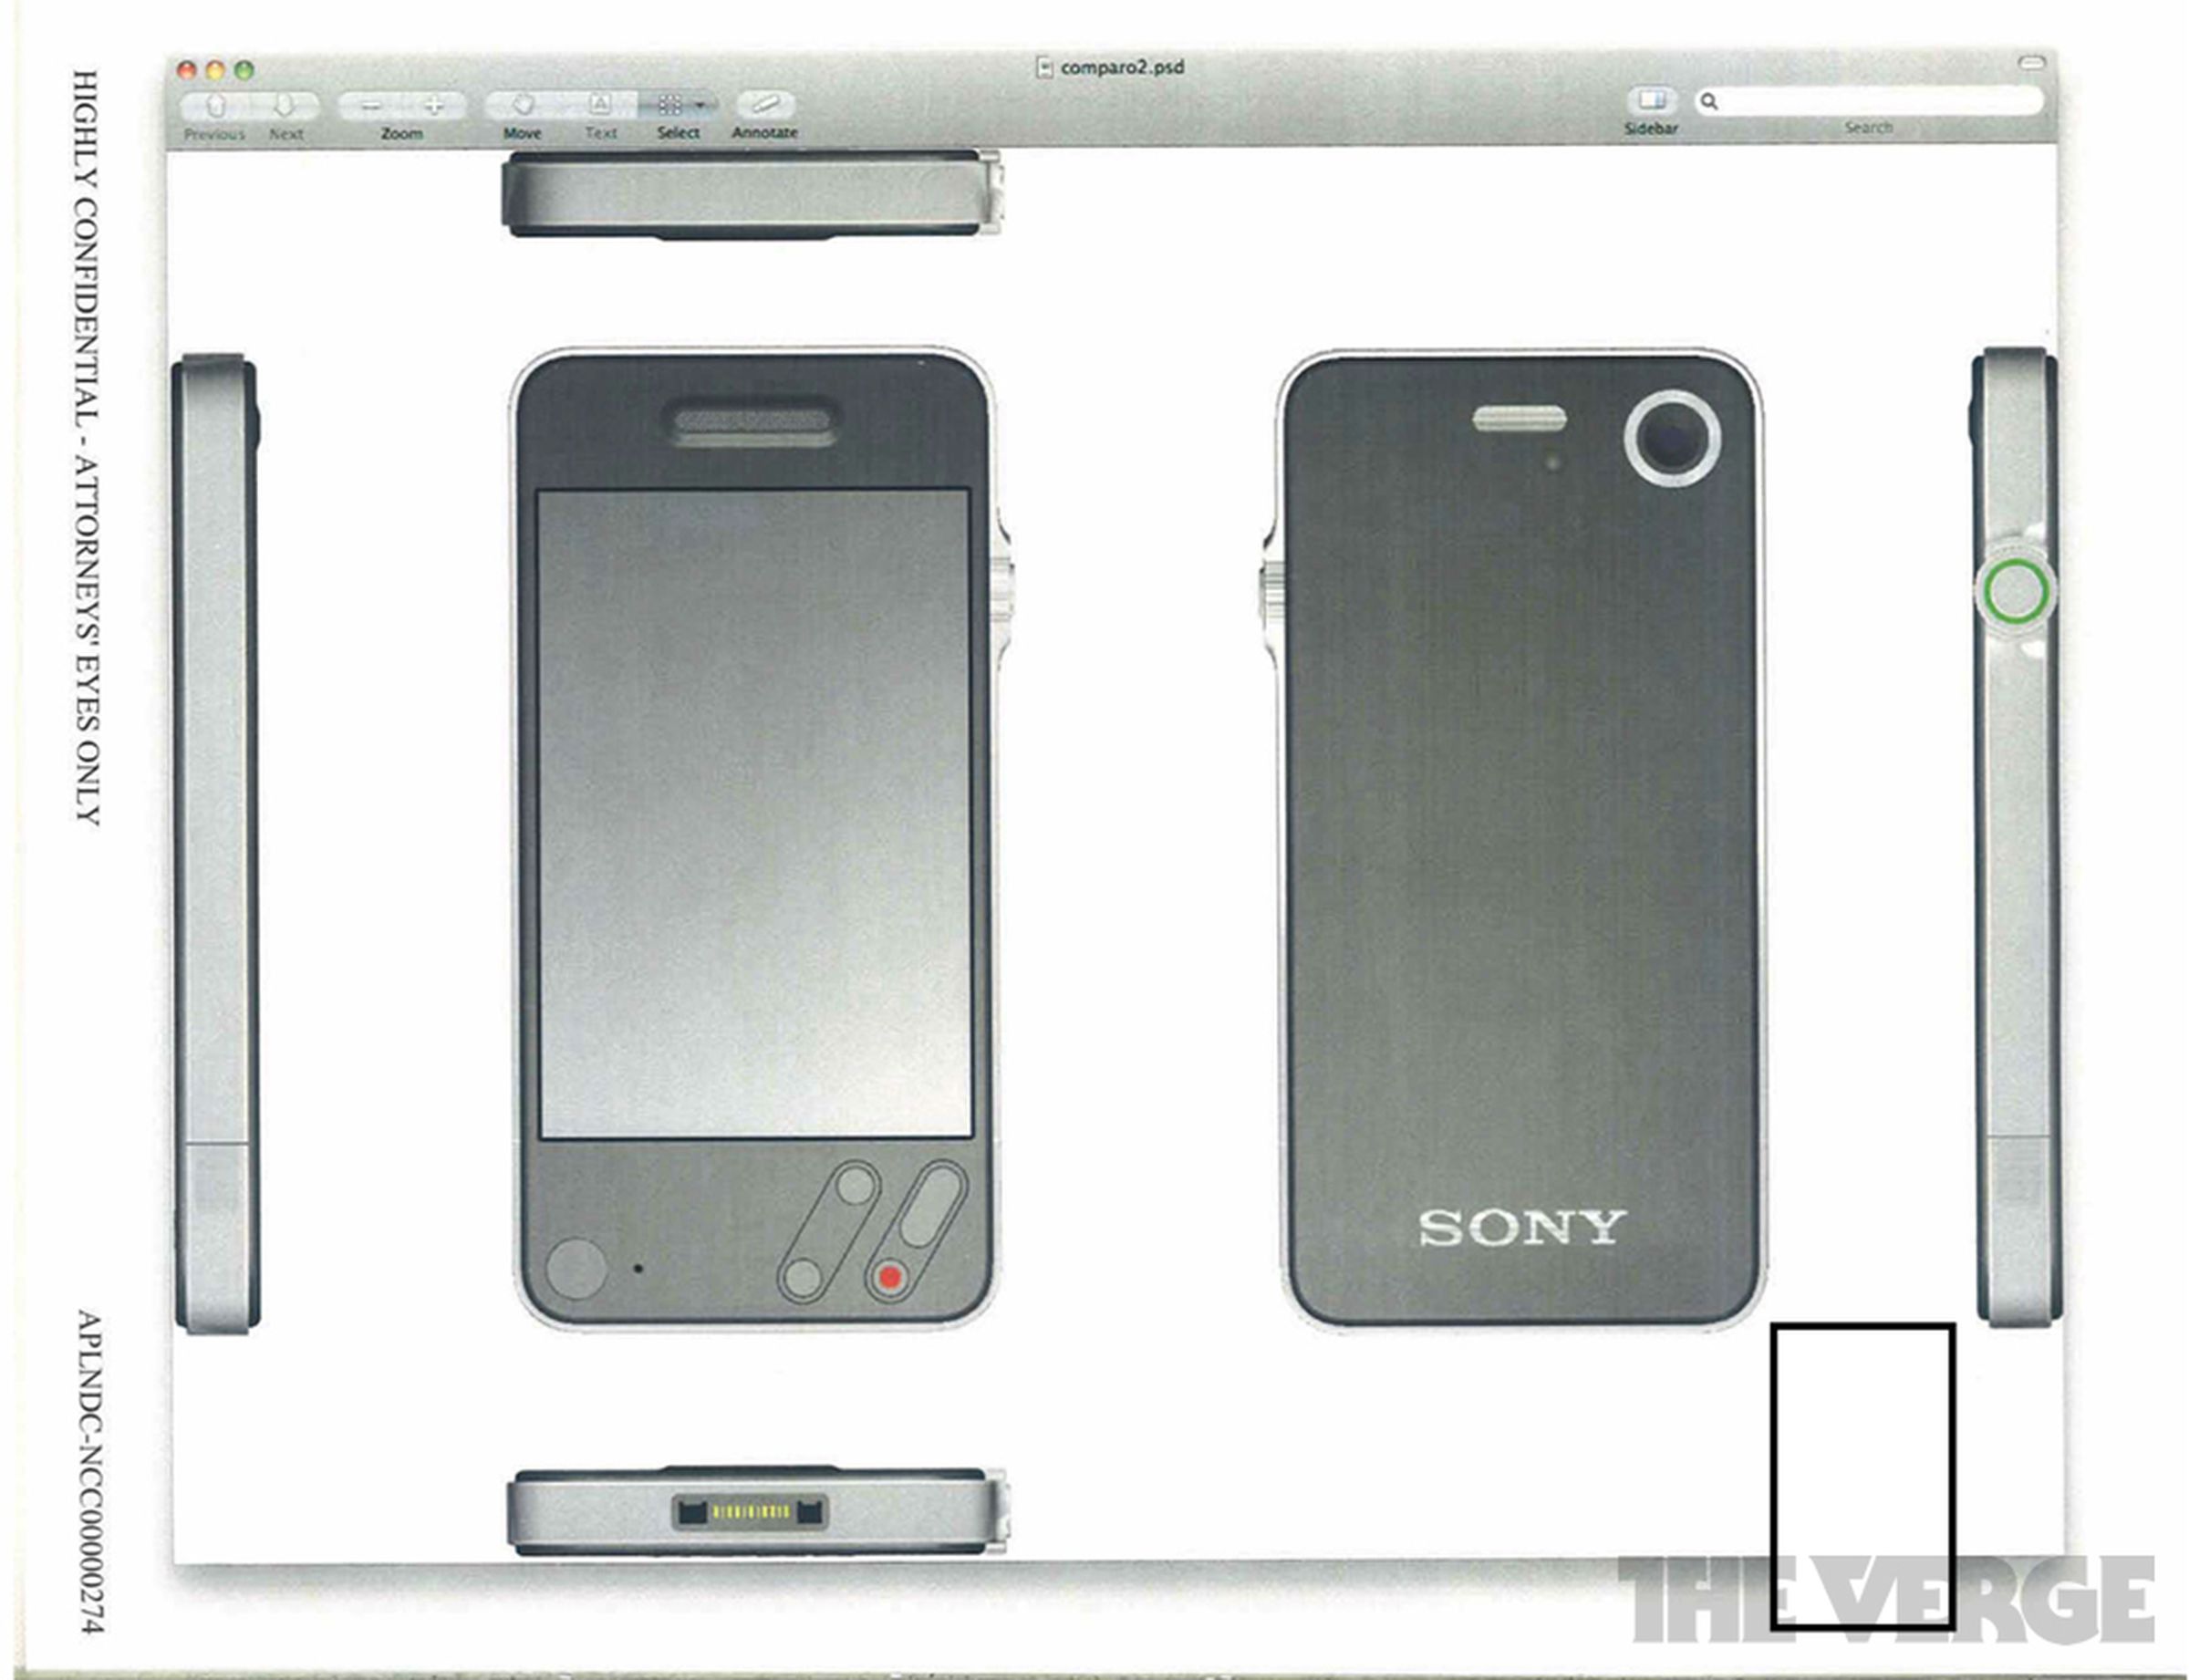 Sony-inspired iPhone design renders